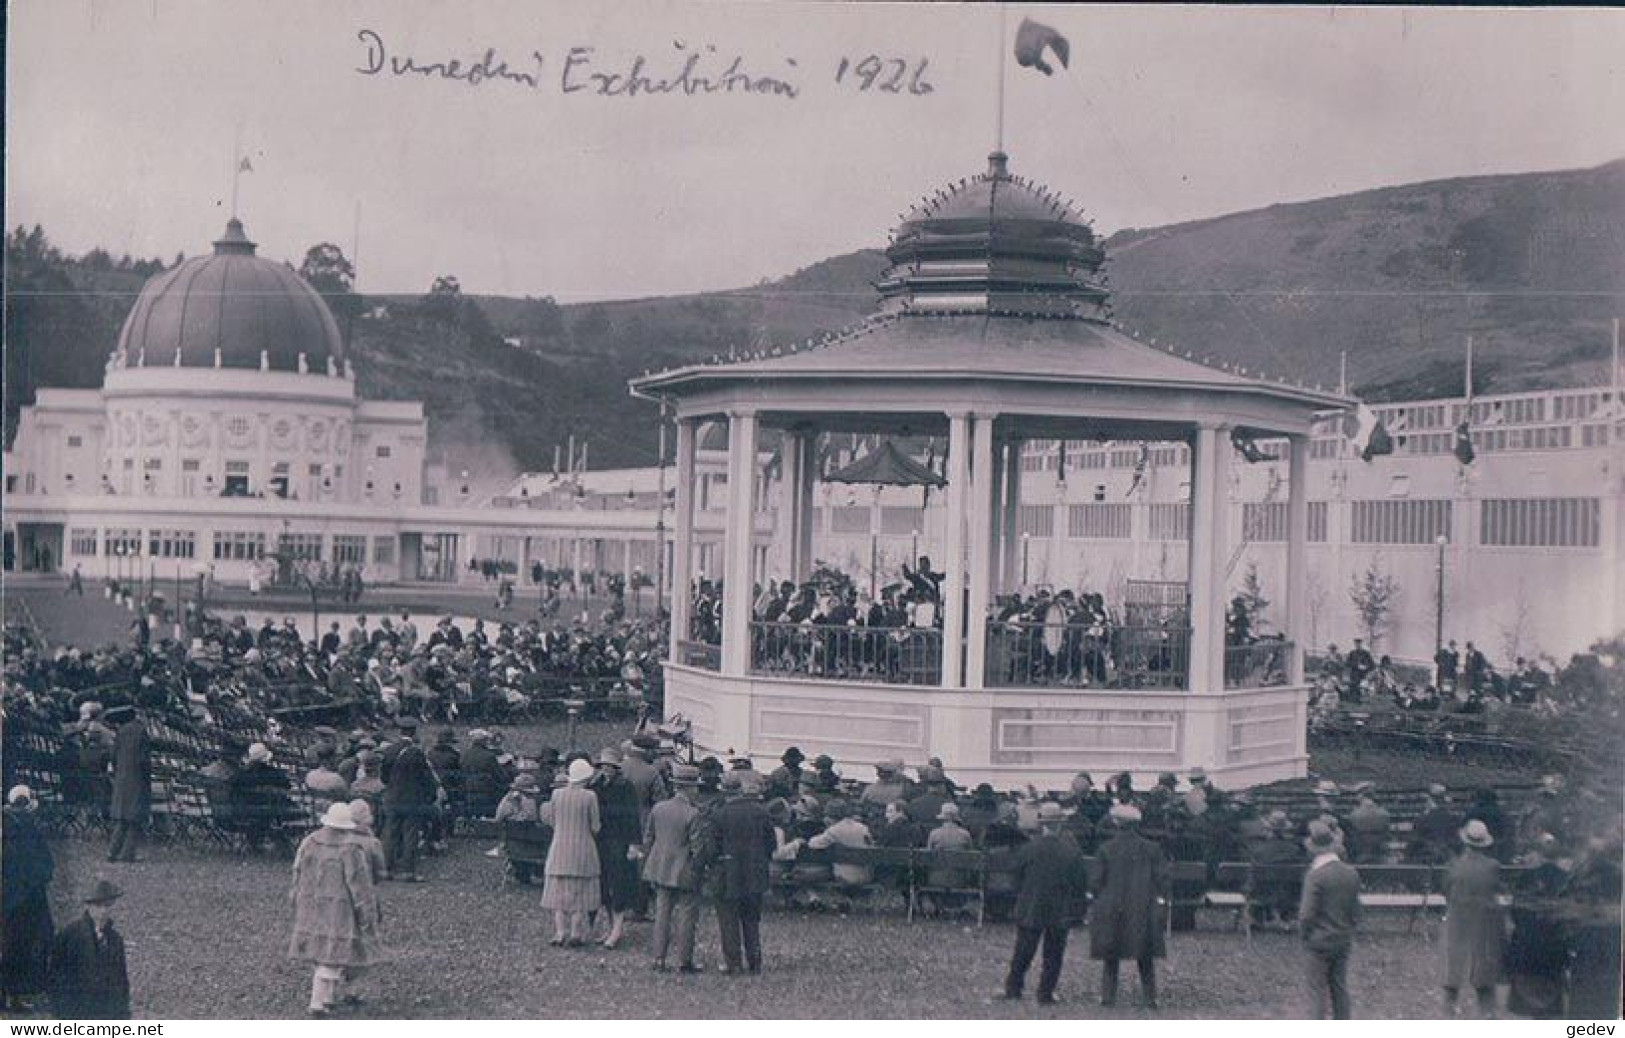 Nouvelle-Zélande Dunedin, Exhibition 1926 (1926) - New Zealand